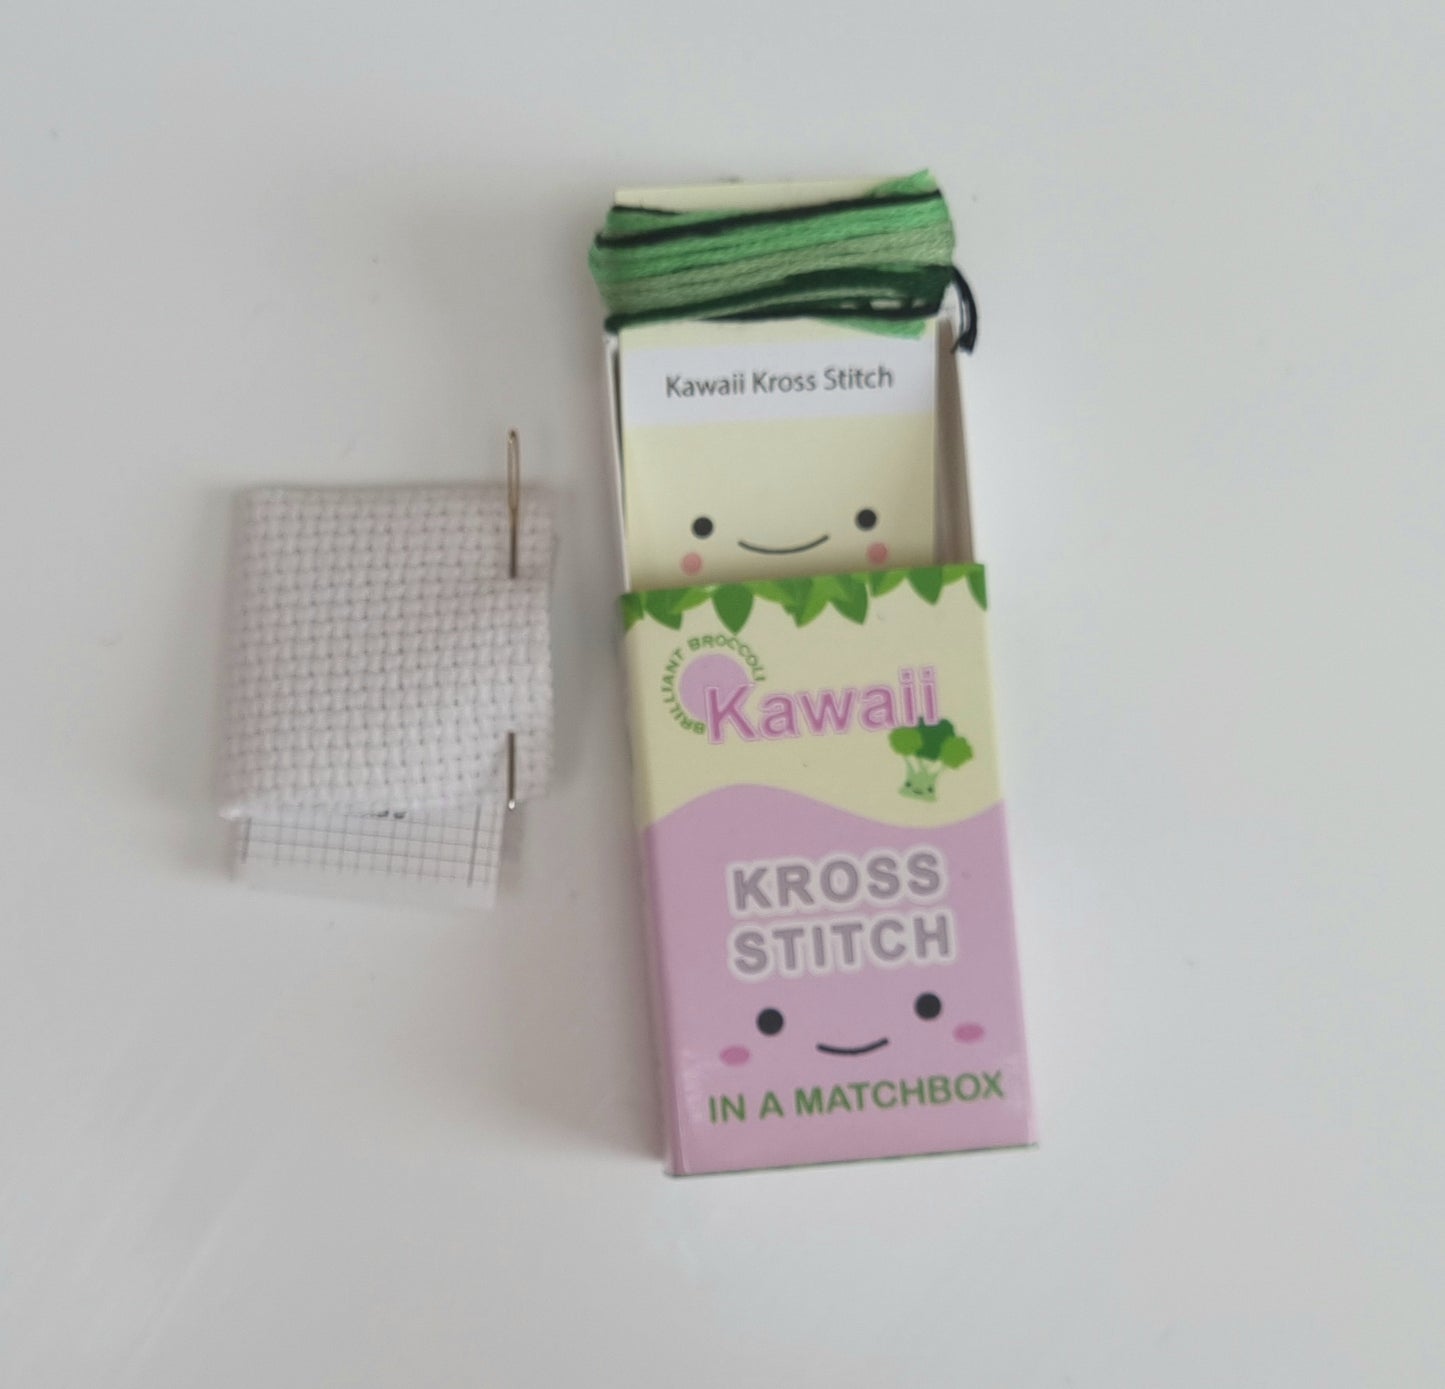 Kawaii cross stitch in a matchbox